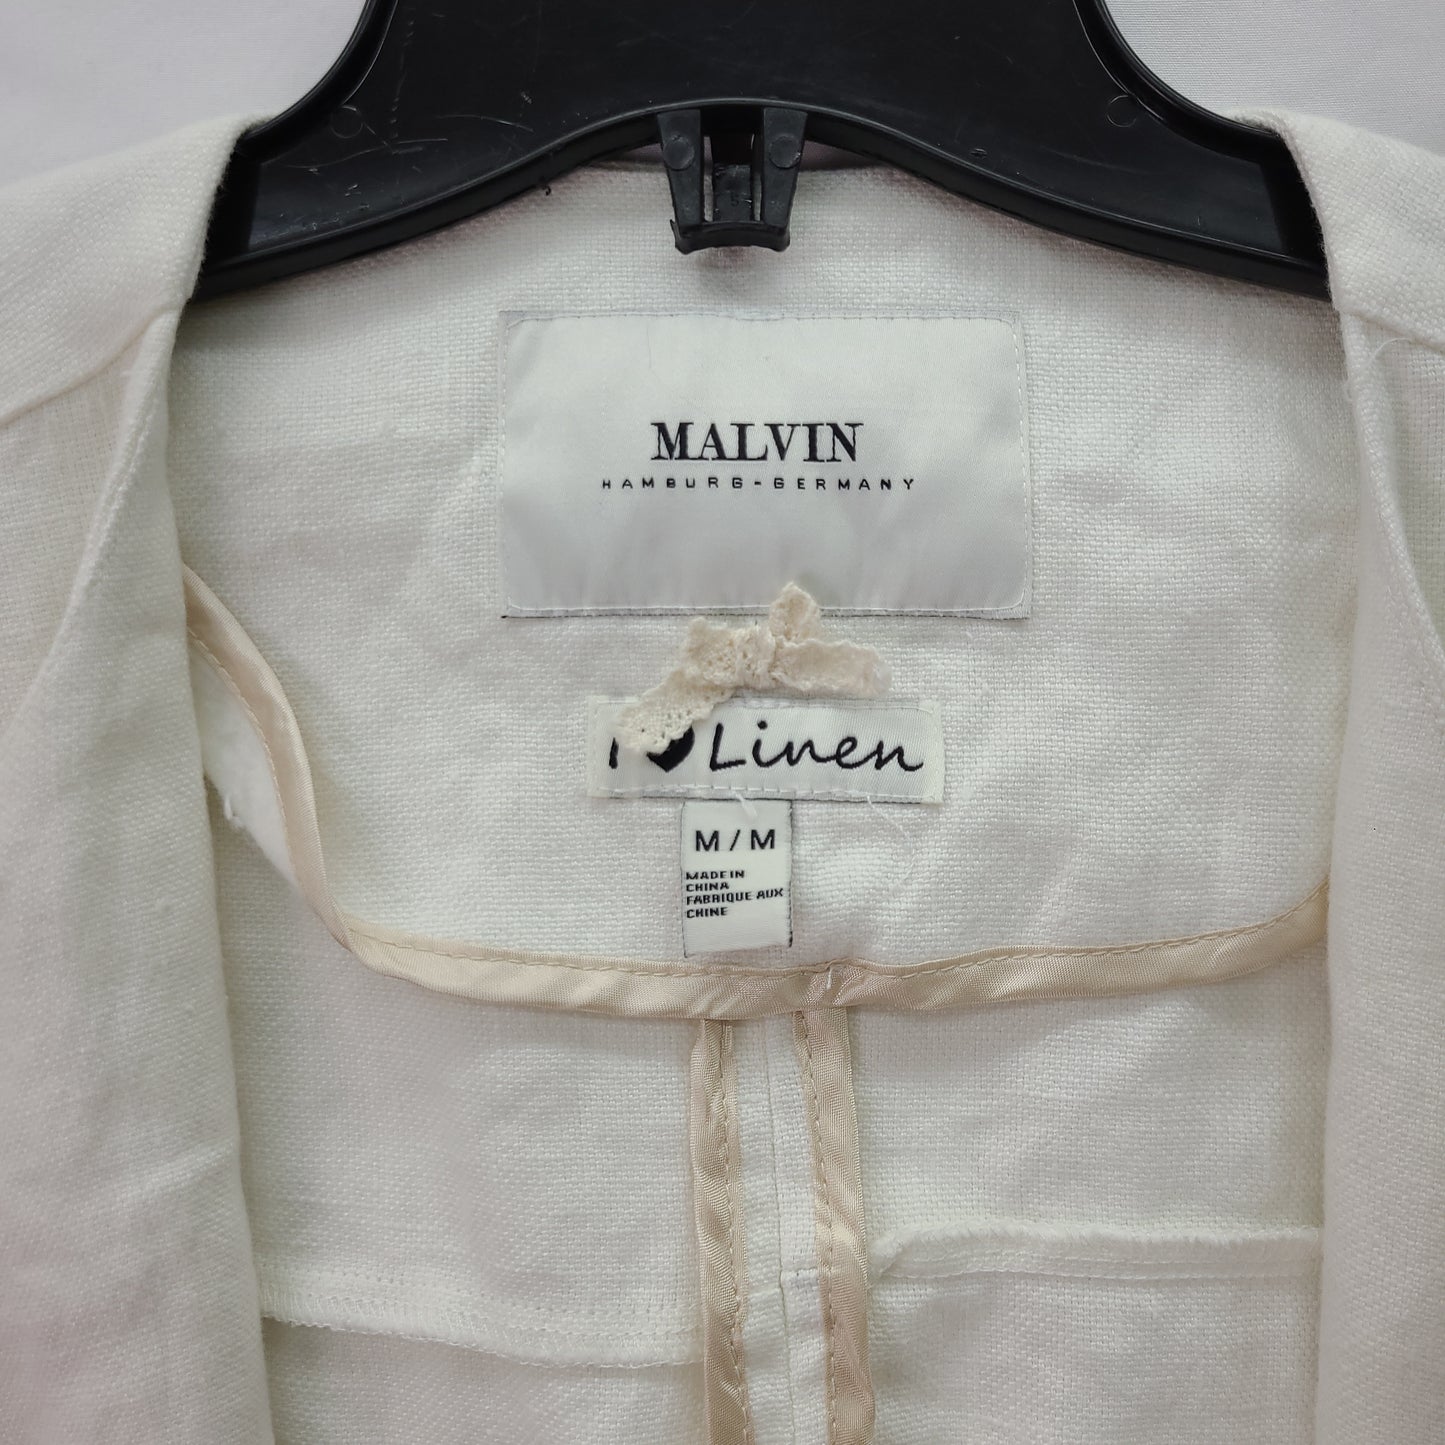 Malvin Hamburg Germany 100% Linen Light Jacket White - Medium